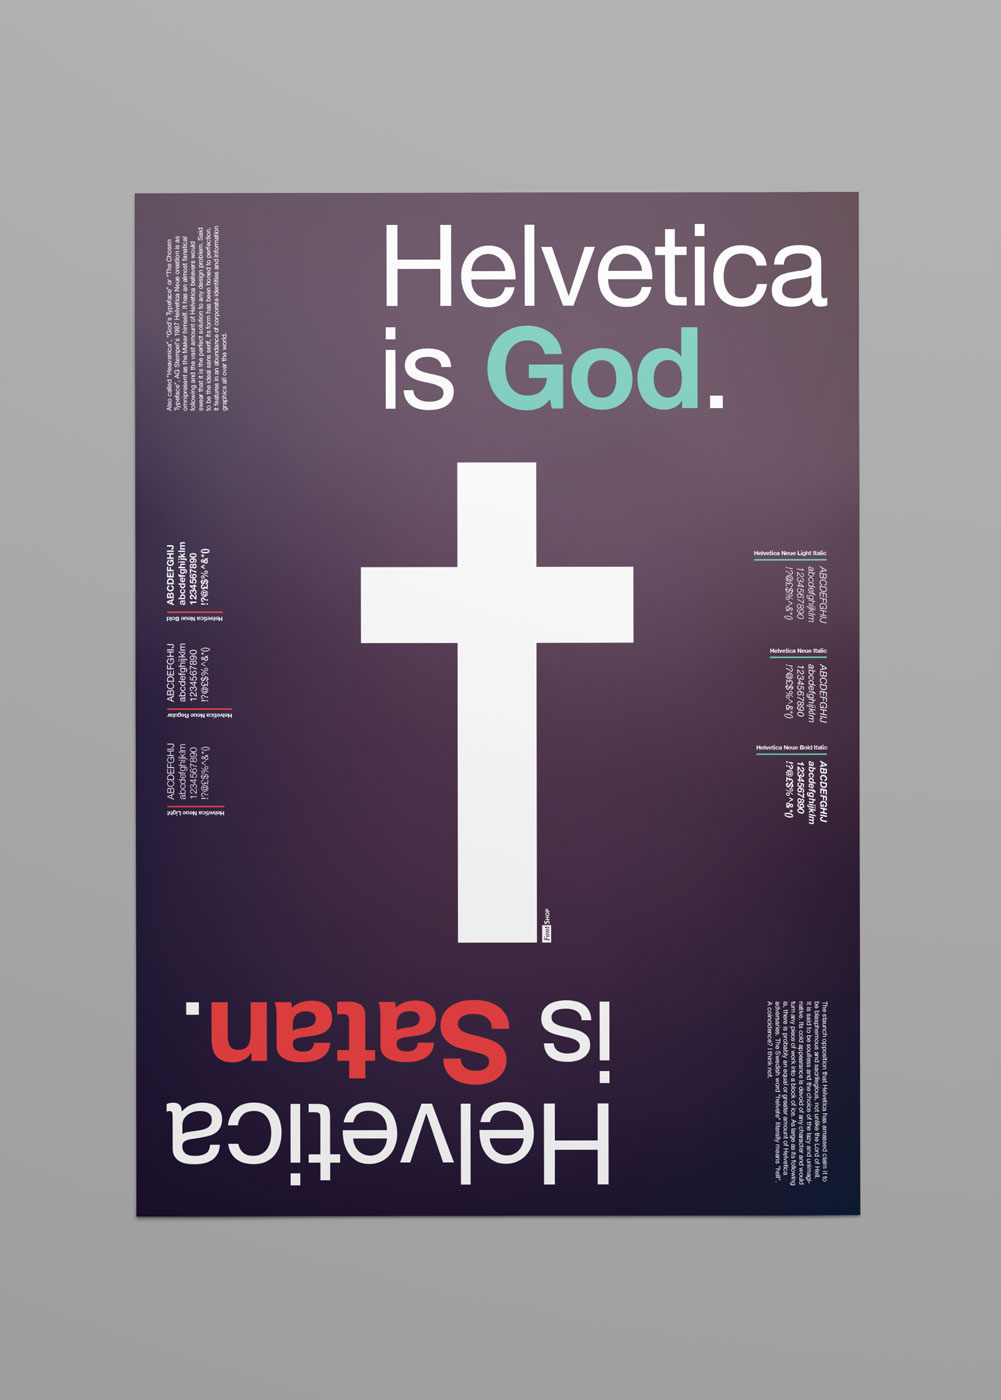 helvetica God Satan religion Typeface symmetrical symmetry upside down poster